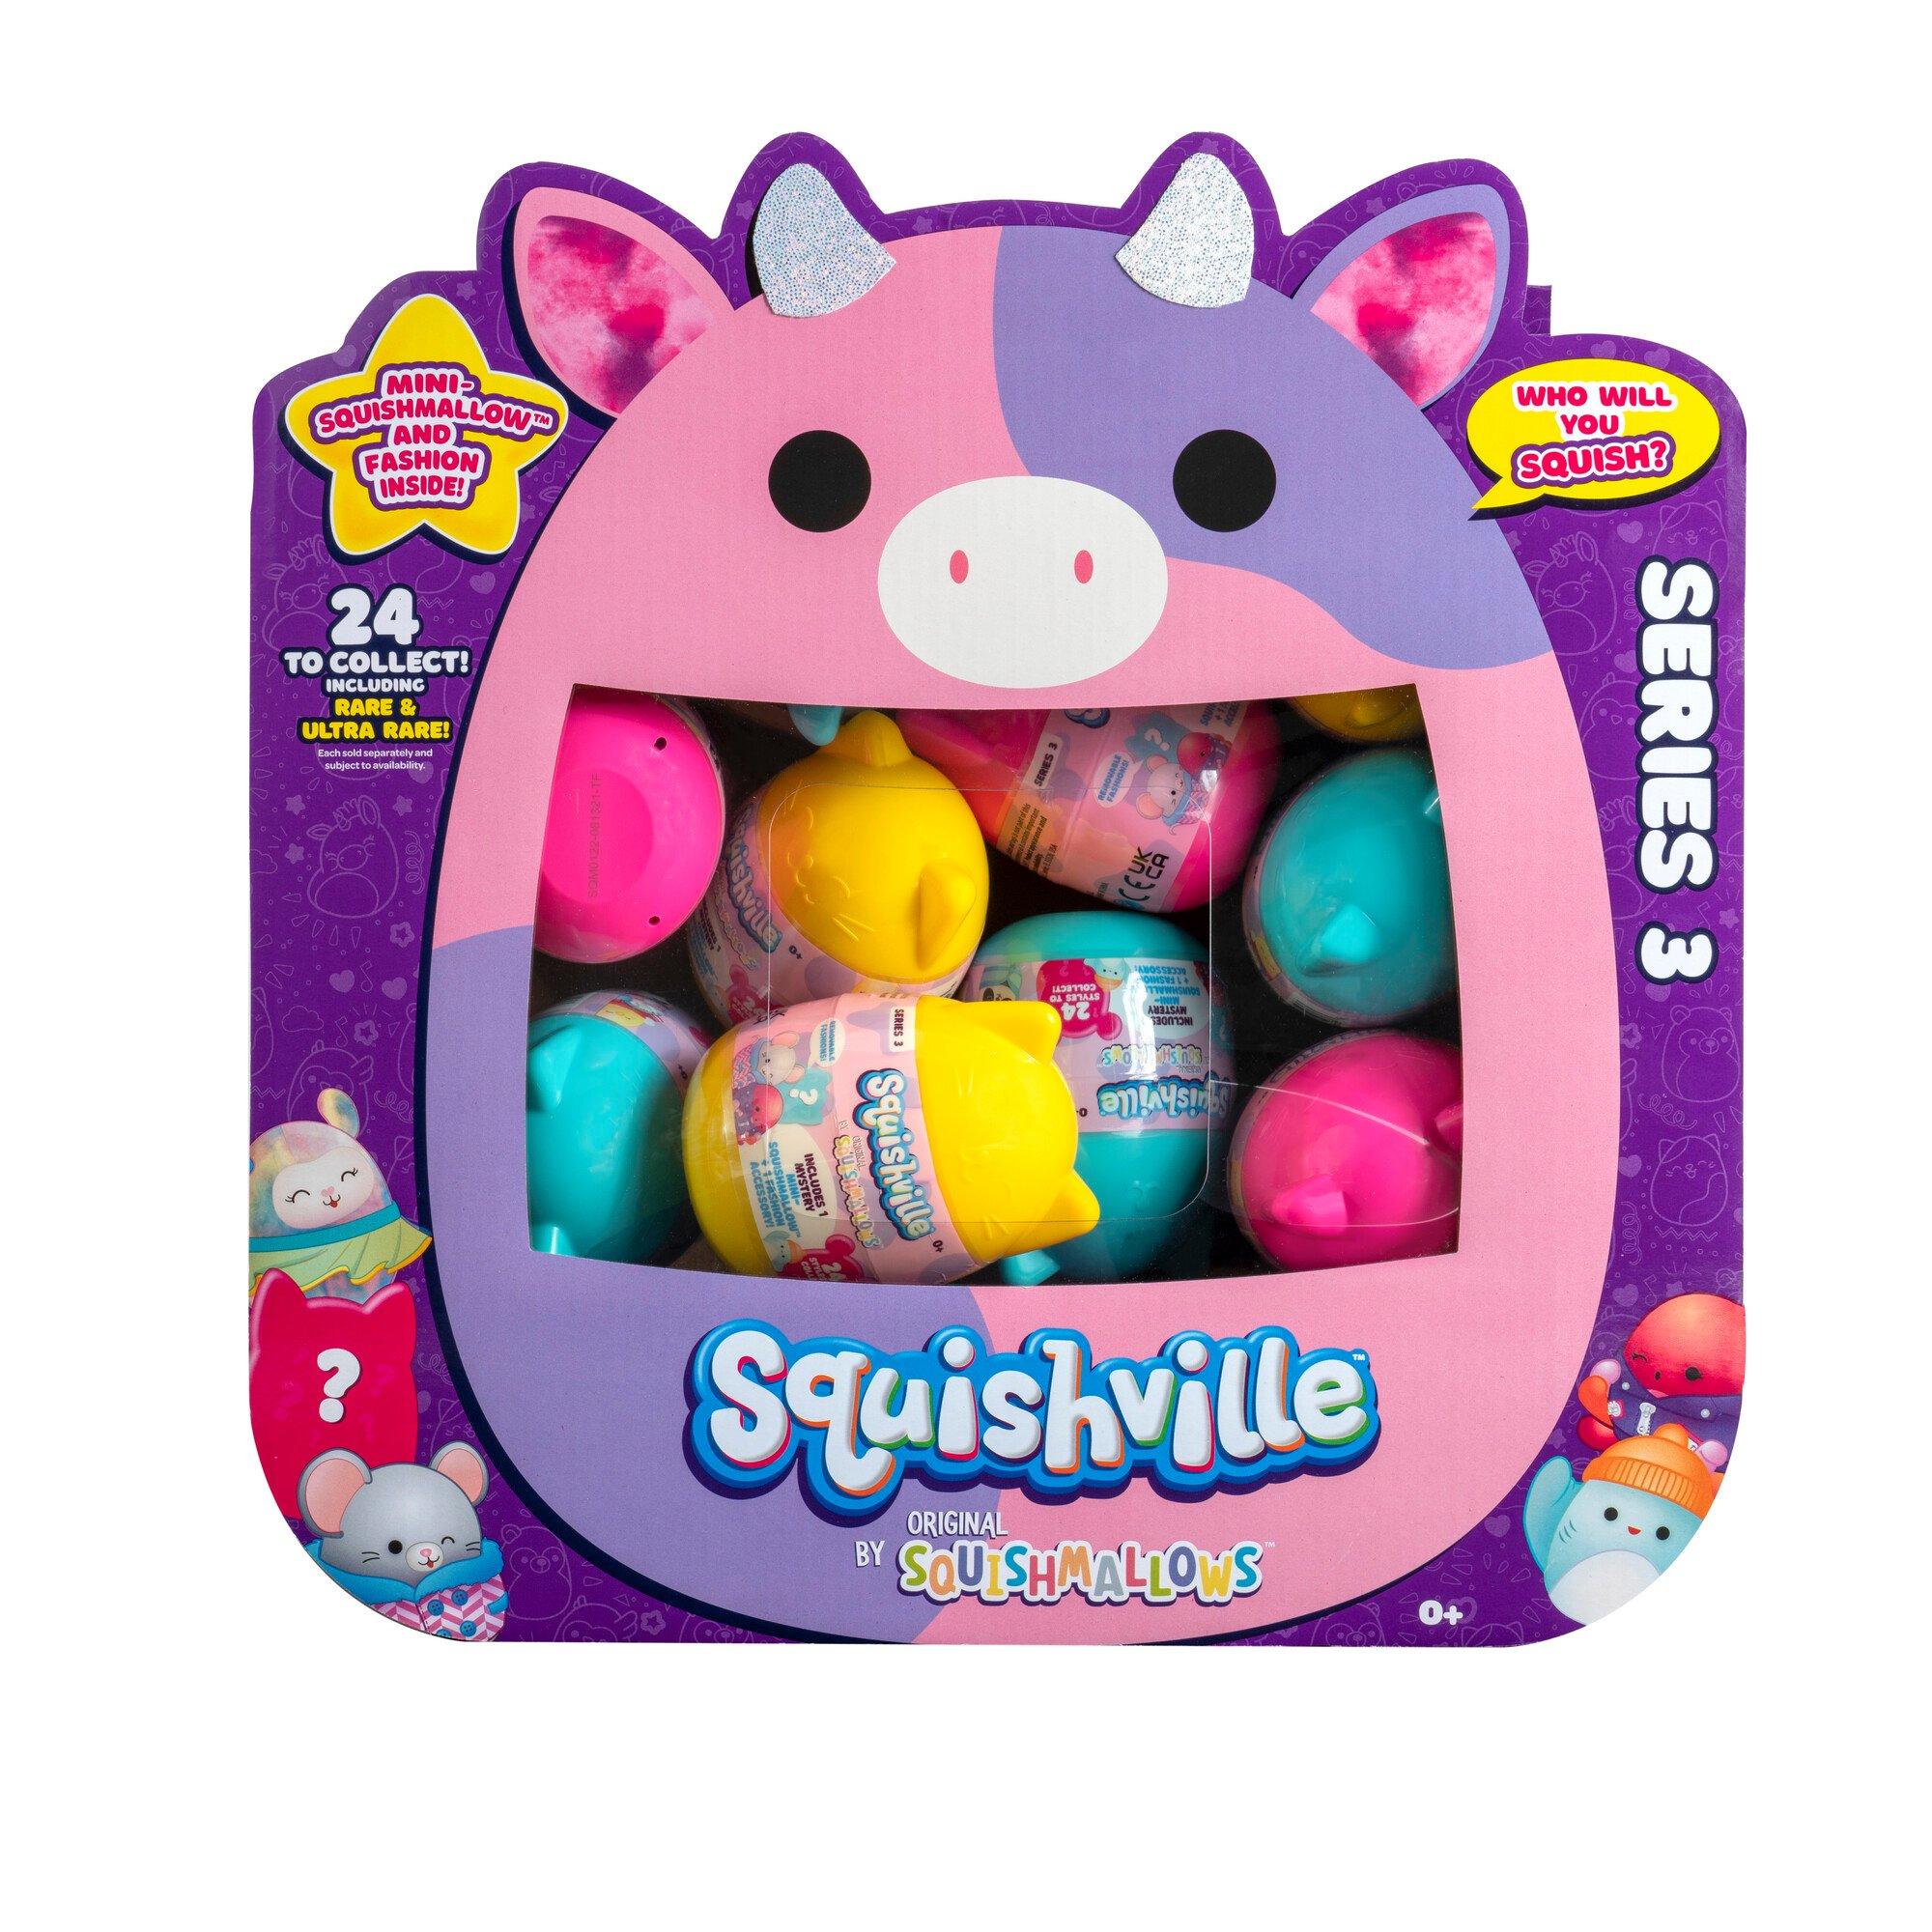 https://media.gamestop.com/i/gamestop/11136909/Squishmallows-Squishville-Mystery-Mini-Plush-Blind-Bag-Series-3?$pdp$